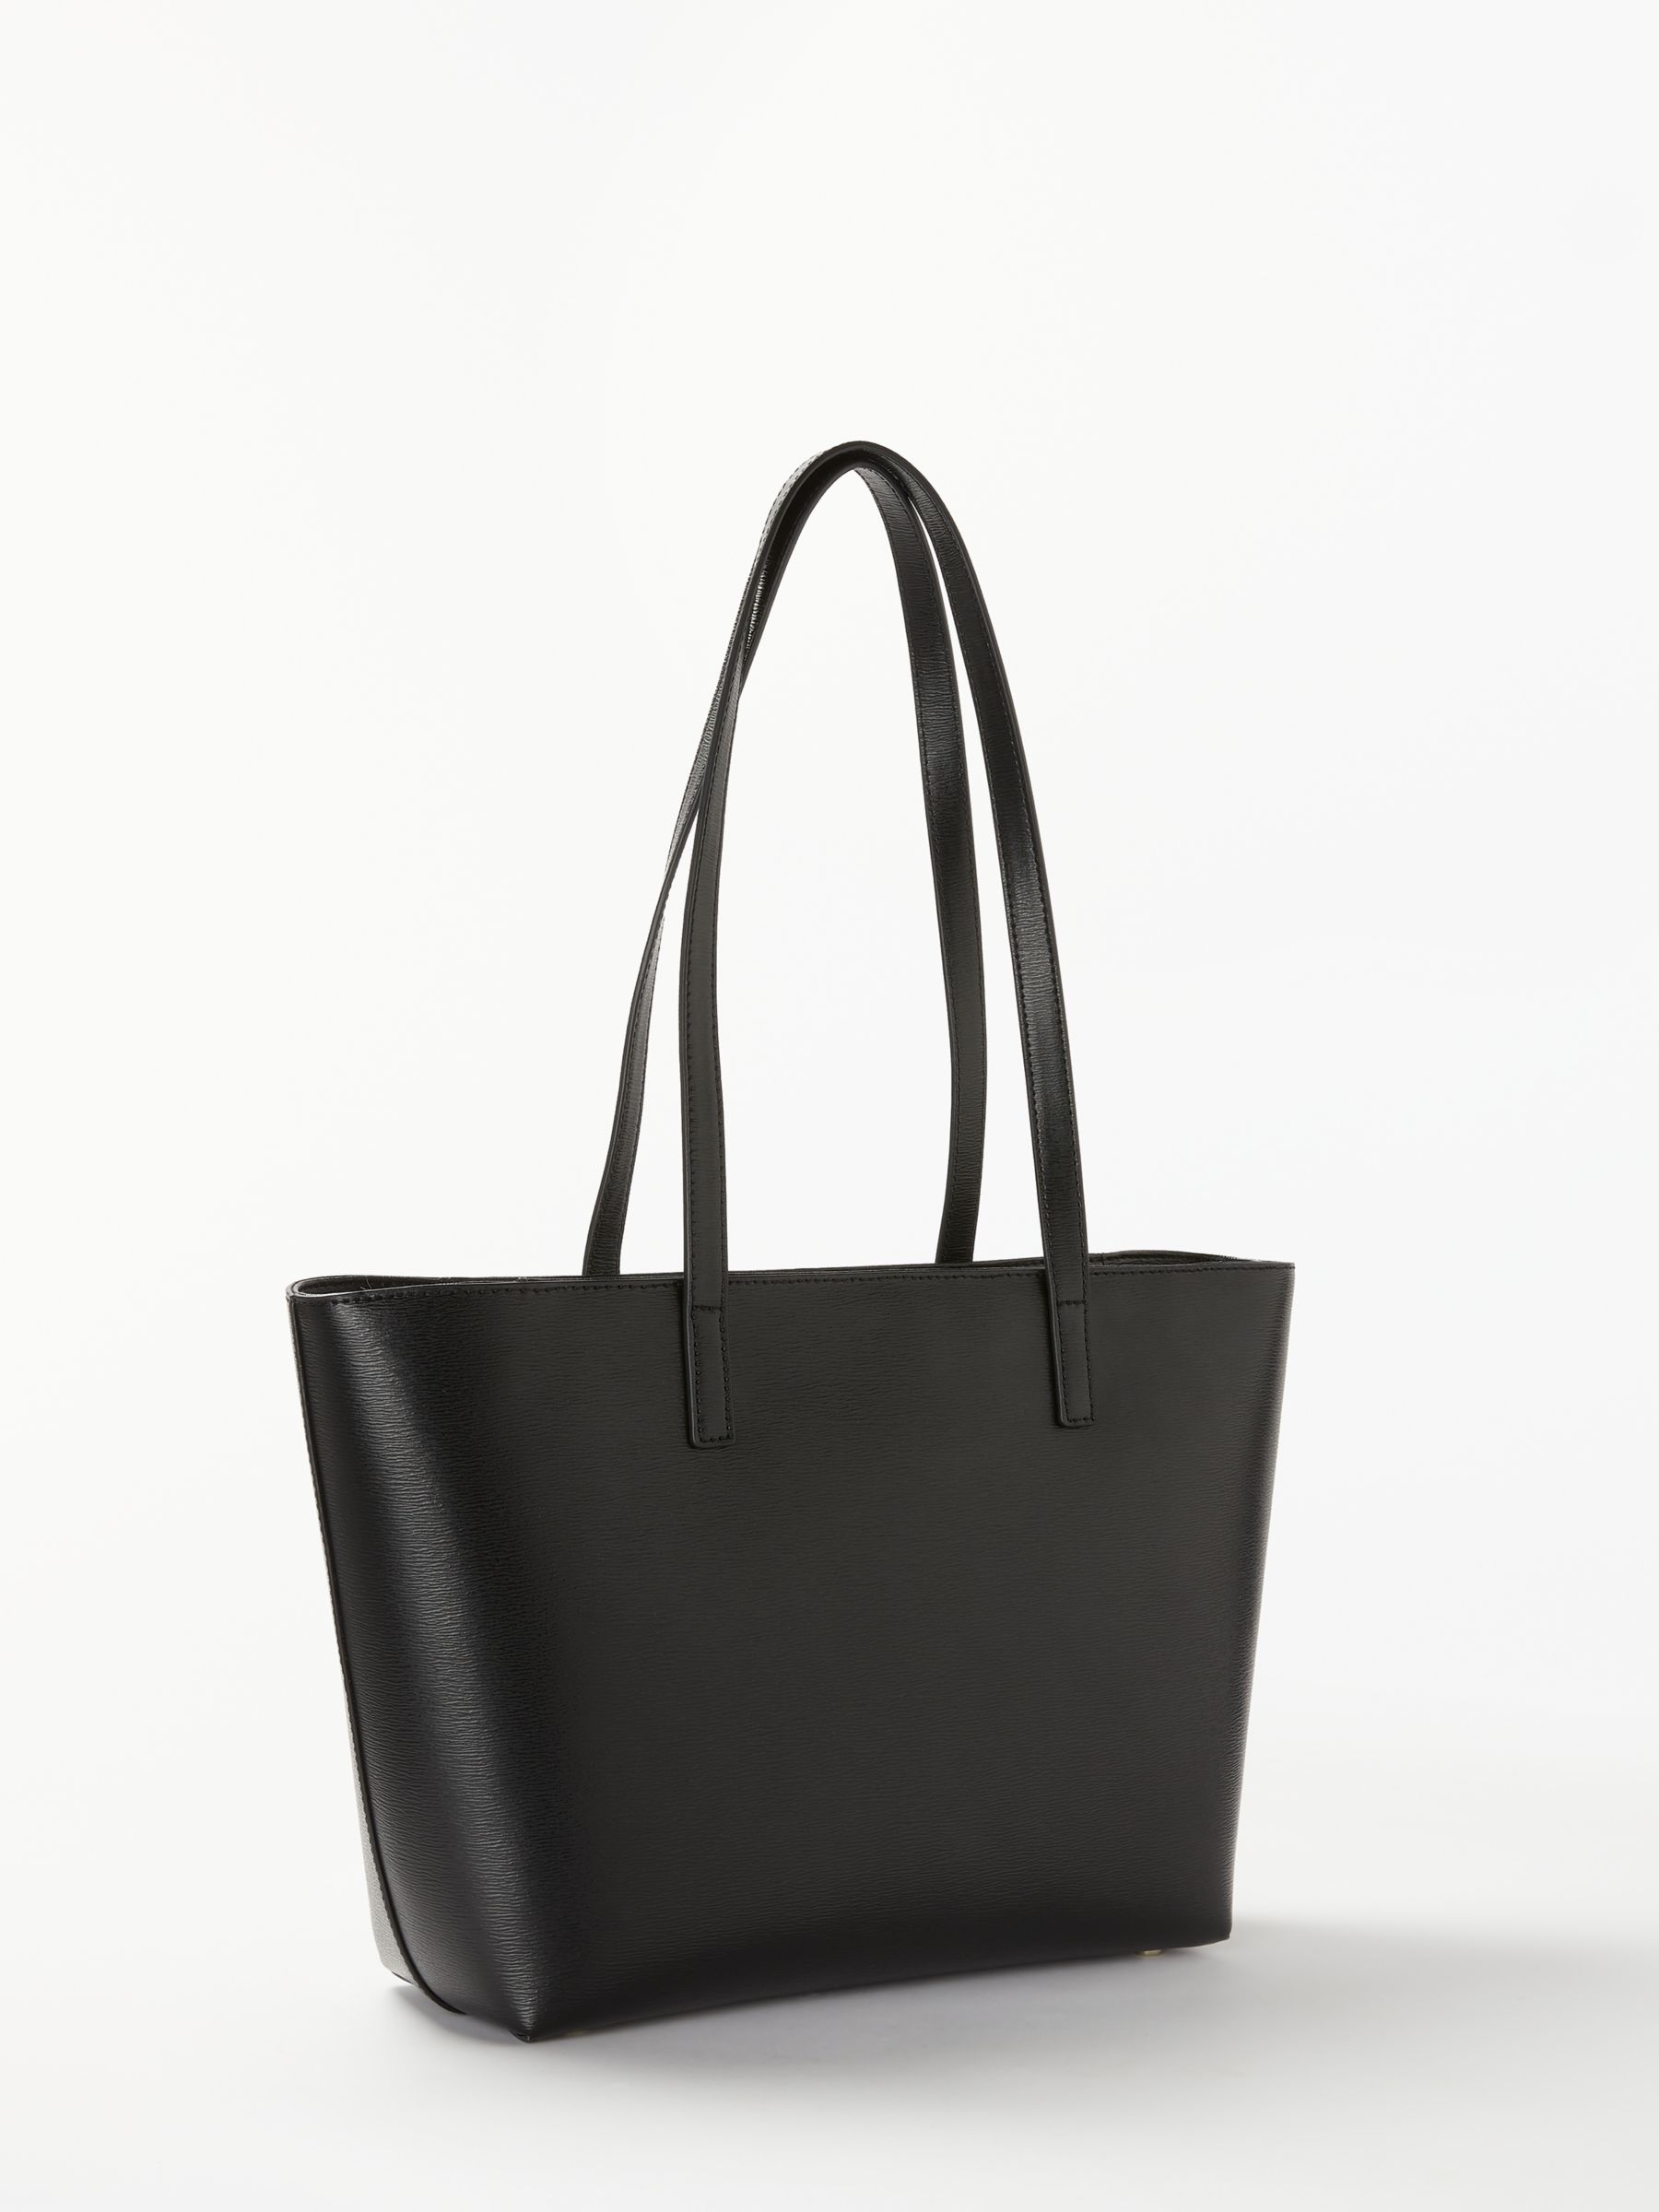 DKNY Bryant Logo Tote Bag, Chino/Caramel at John Lewis & Partners